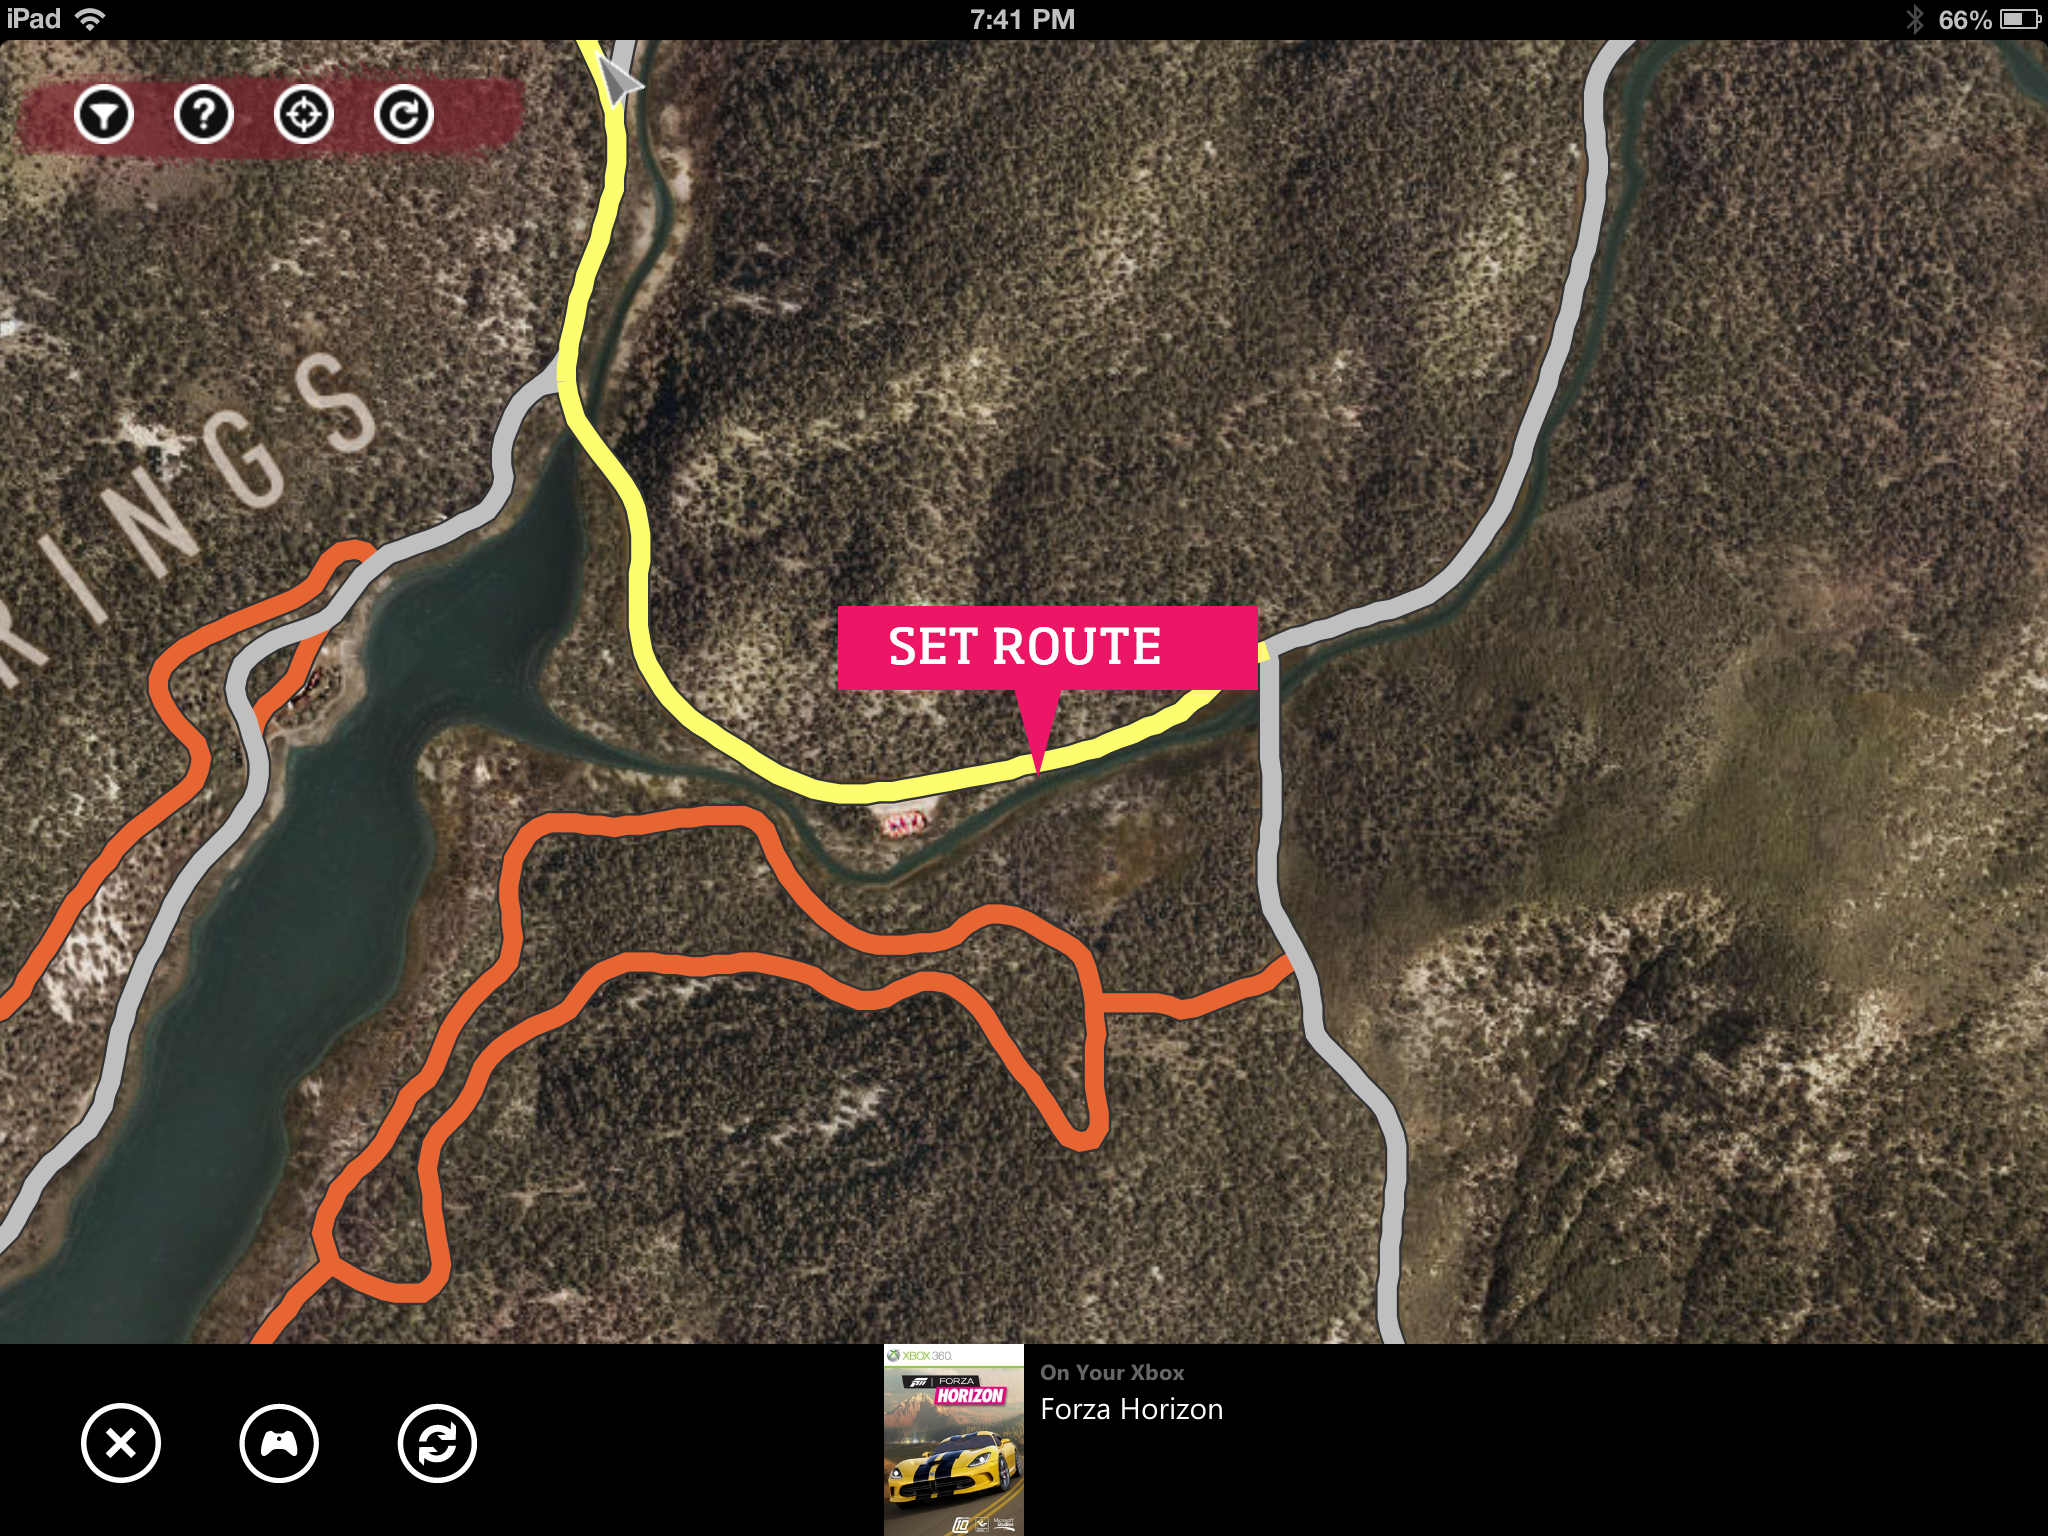 A view of the map in Forza Horizon via Xbox SmartGlass